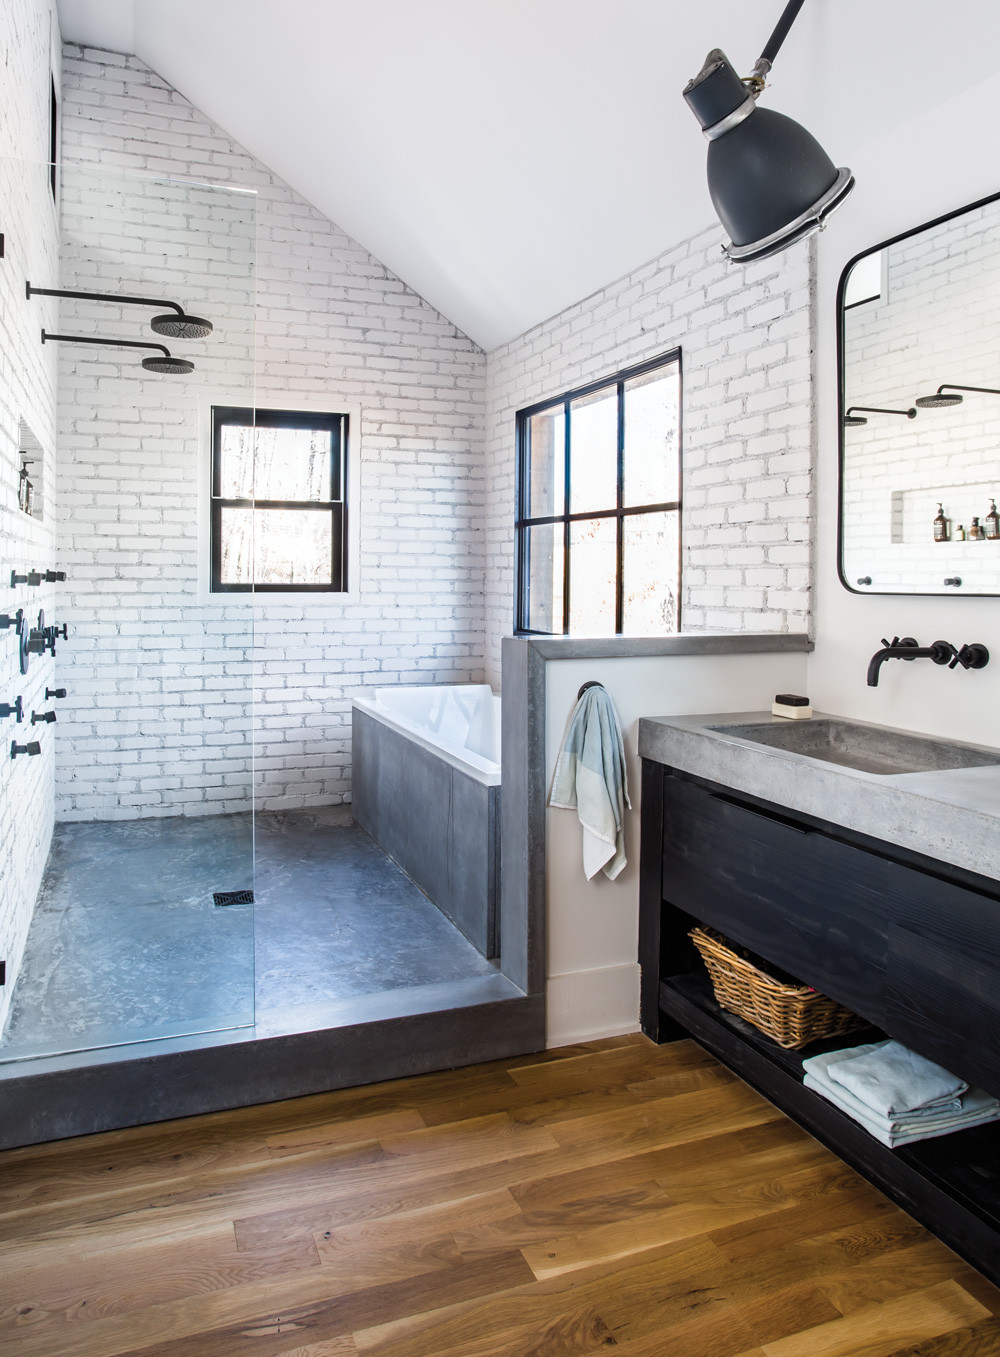 Farmhouse Master Bathroom Ideas
 Room Envy At Serenbe a master bath with a modern